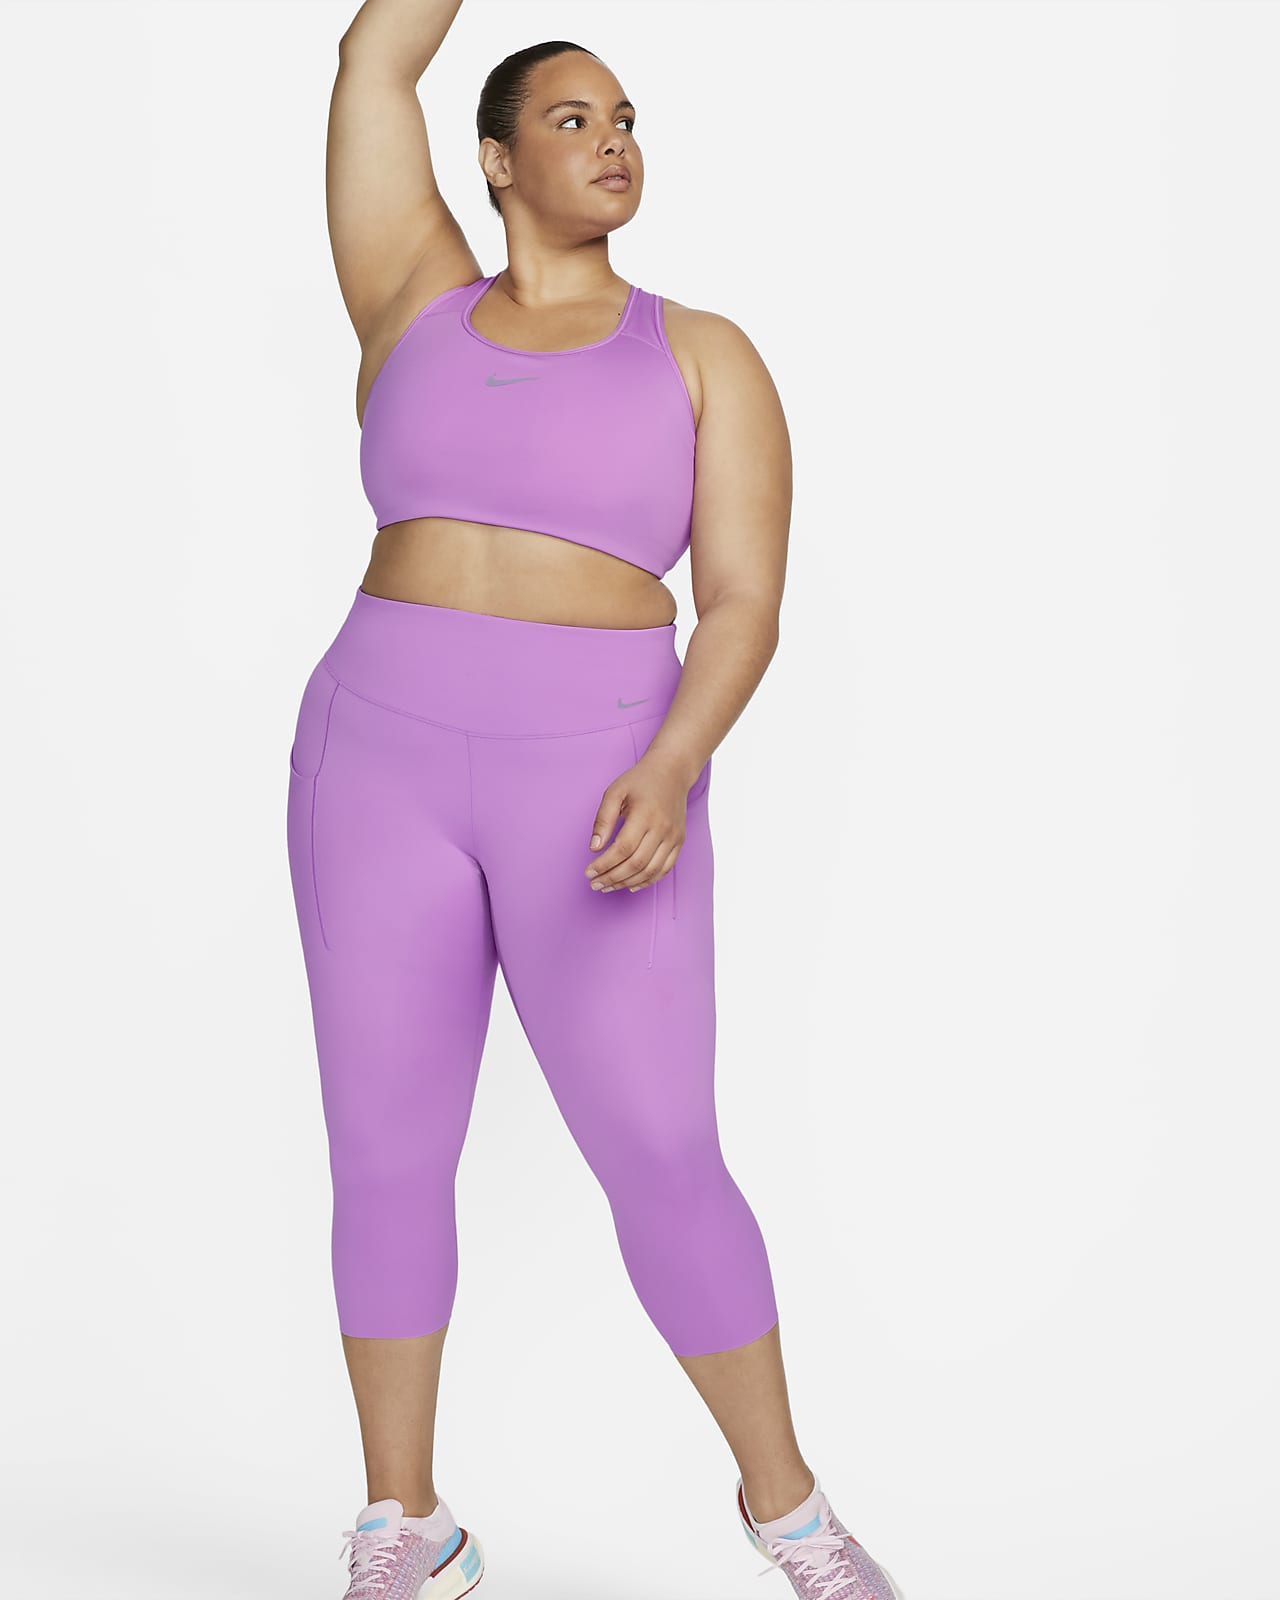 USA Pro High Rise Seamless Leggings Gym Yoga Pants Acrivewear Pink